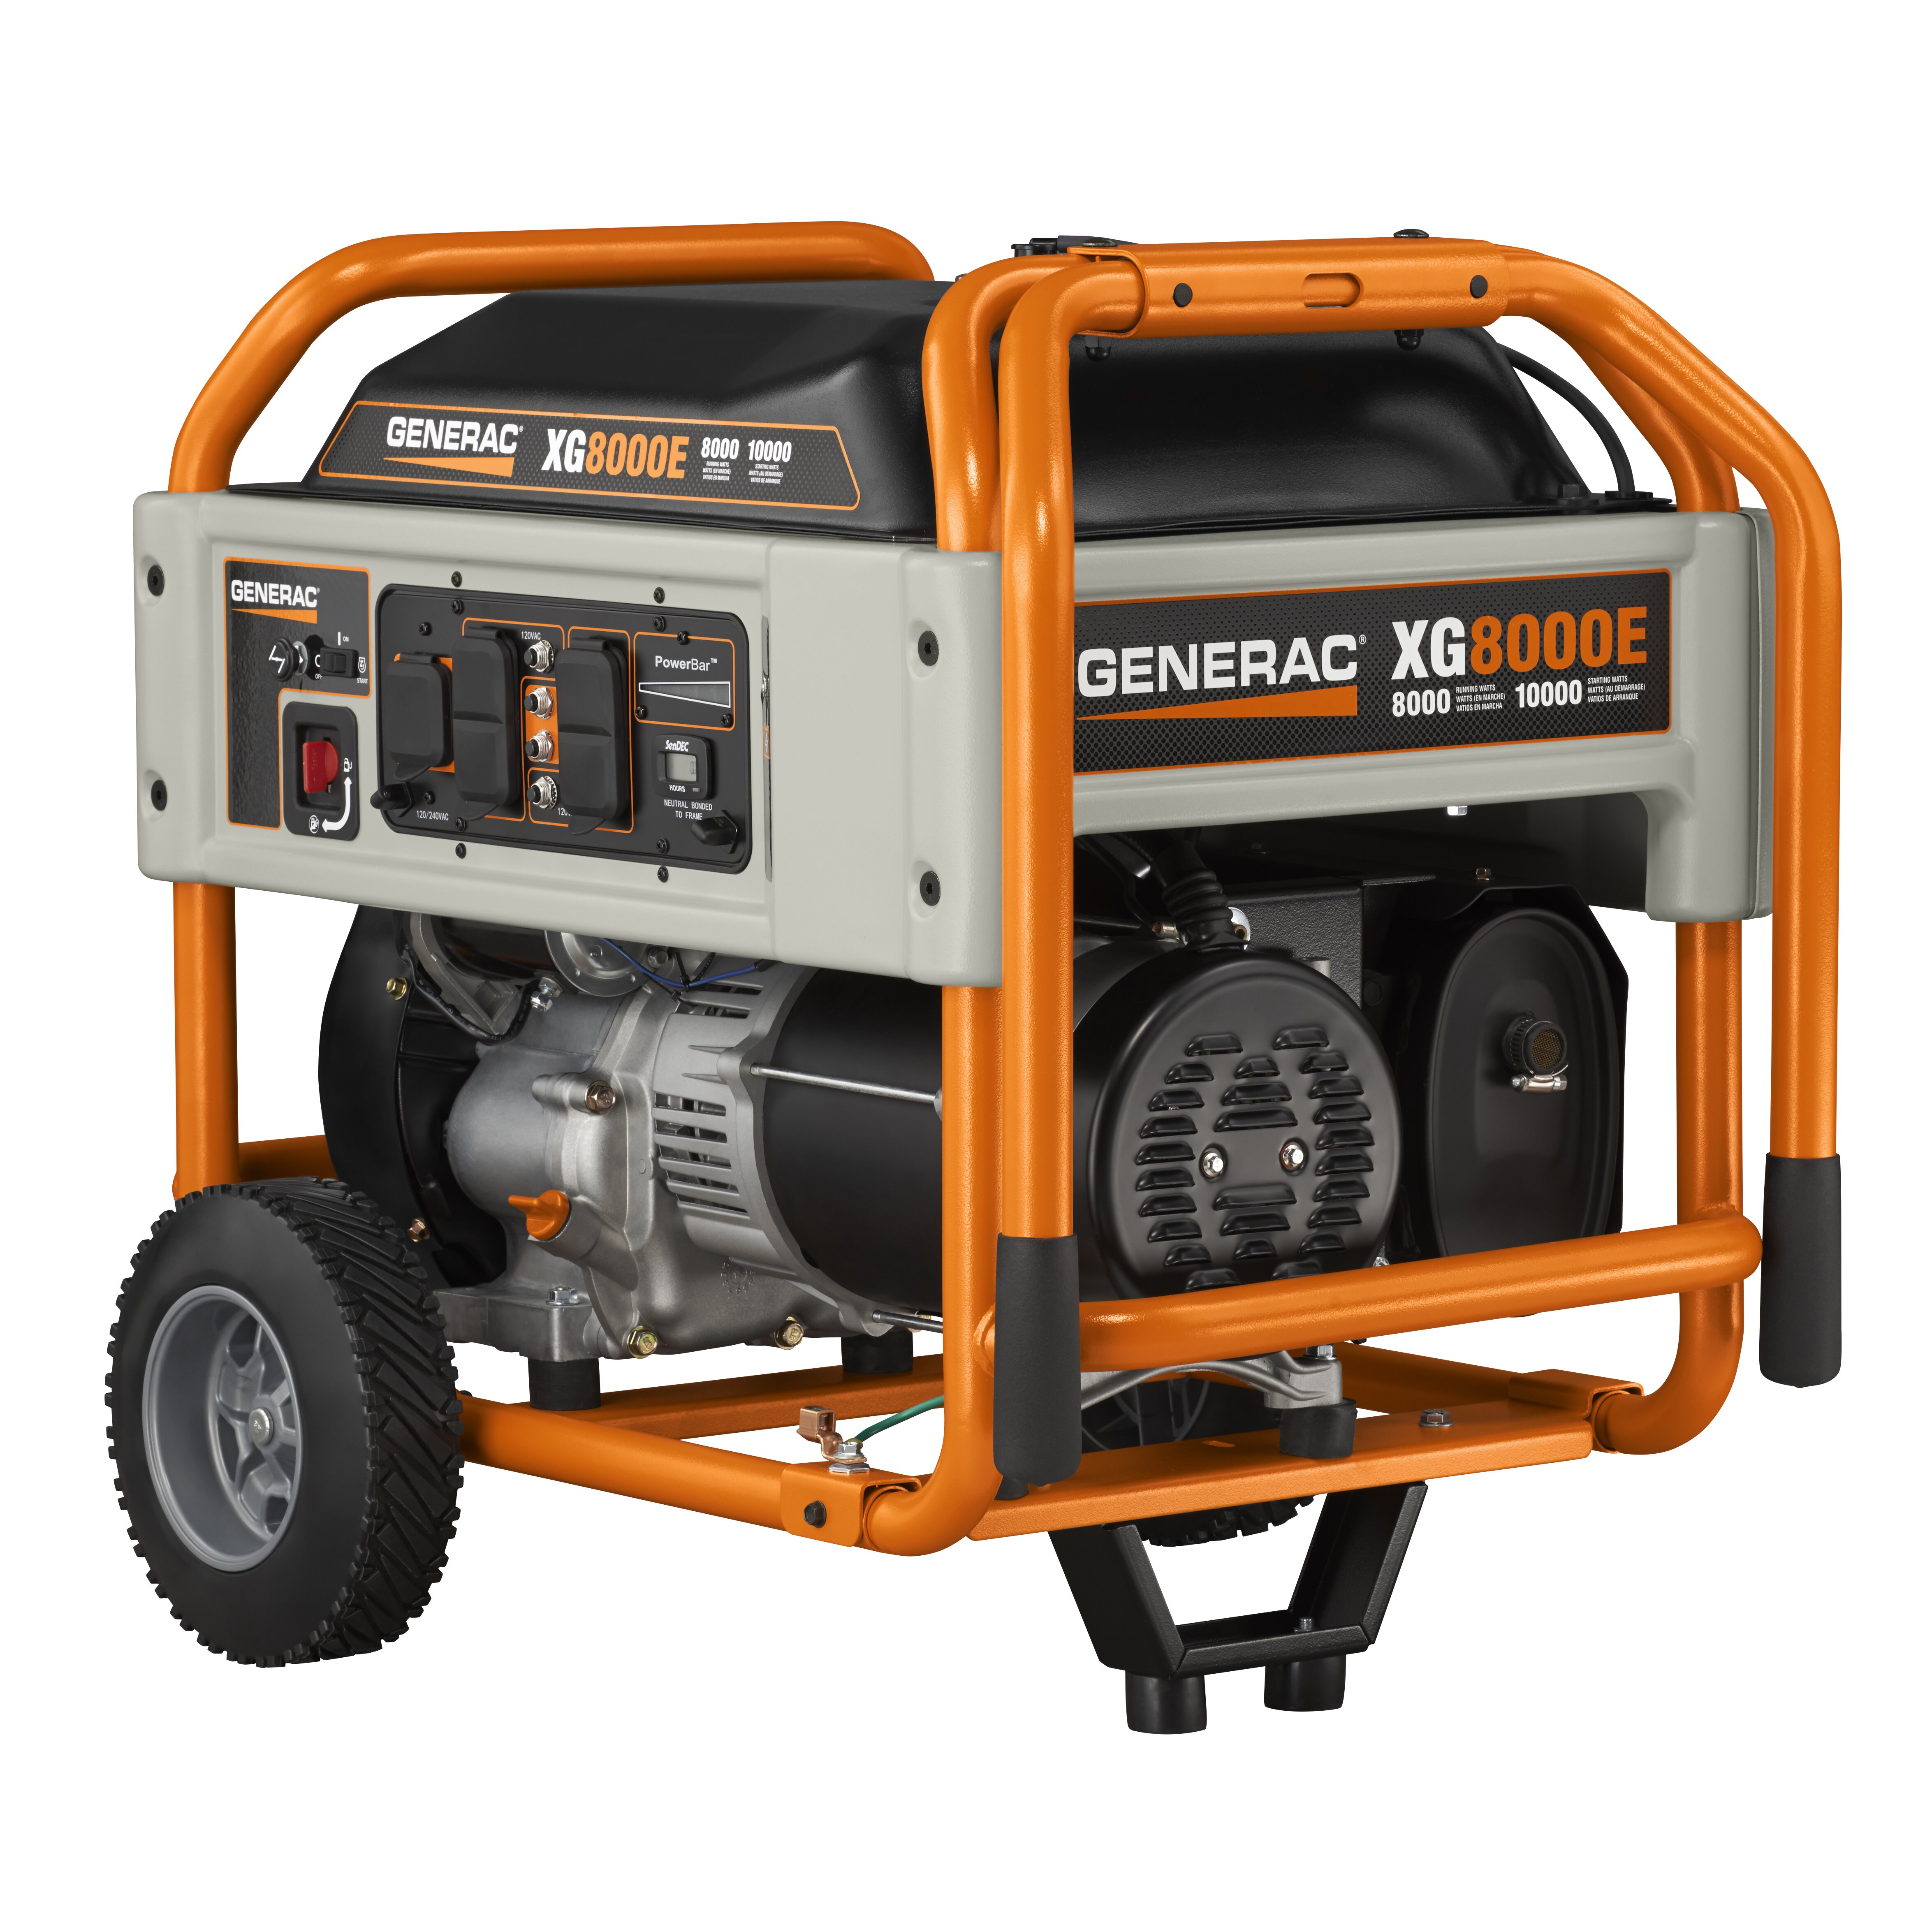 Generac 8000 Watt Portable Gasoline Generator & Reviews | Wayfair